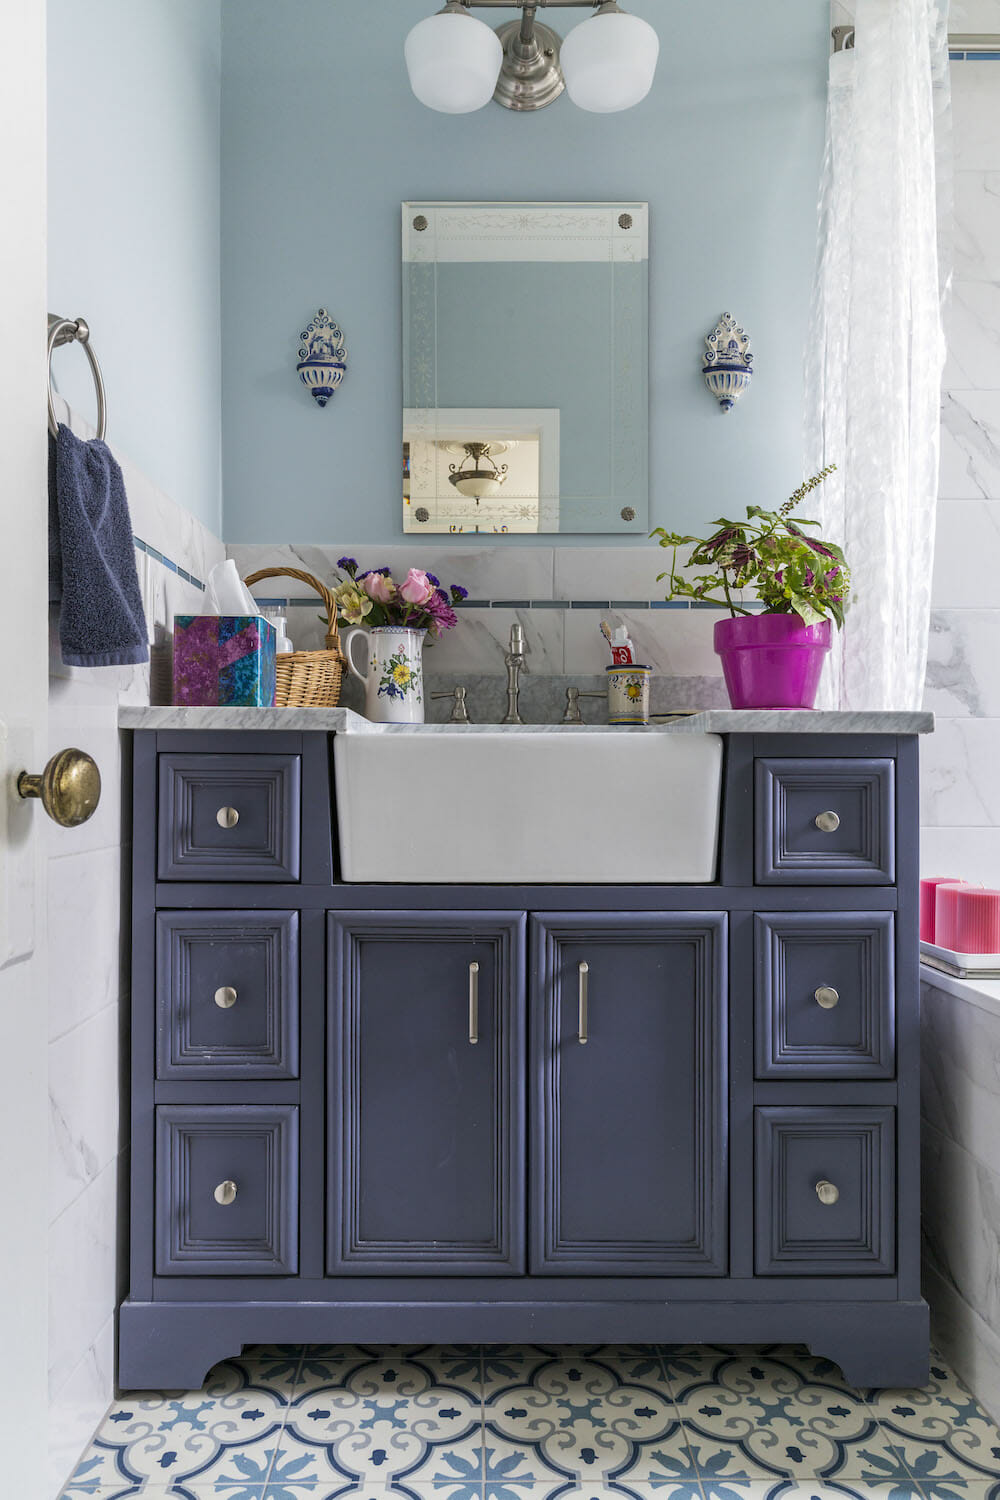 patterned blue floor tiles under powder blue bathroom vanity and a large farmhouse white sink after renovation